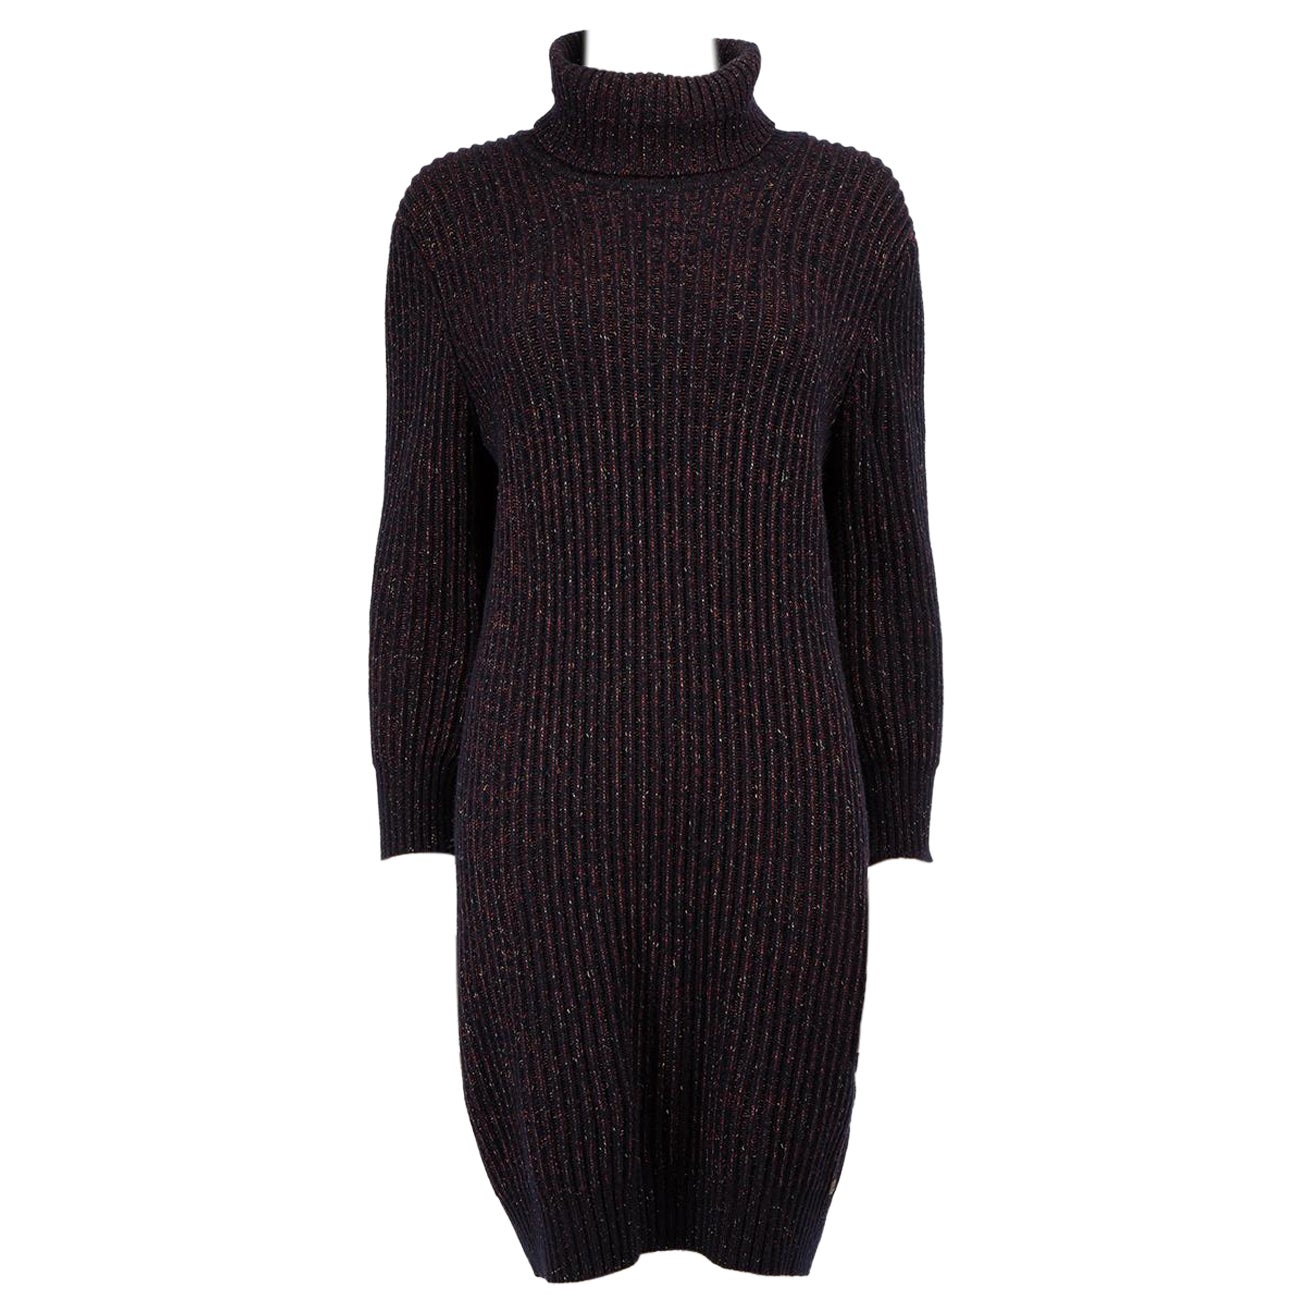 Chanel Navy Cashmere Knit Sweater Dress Size XXL For Sale